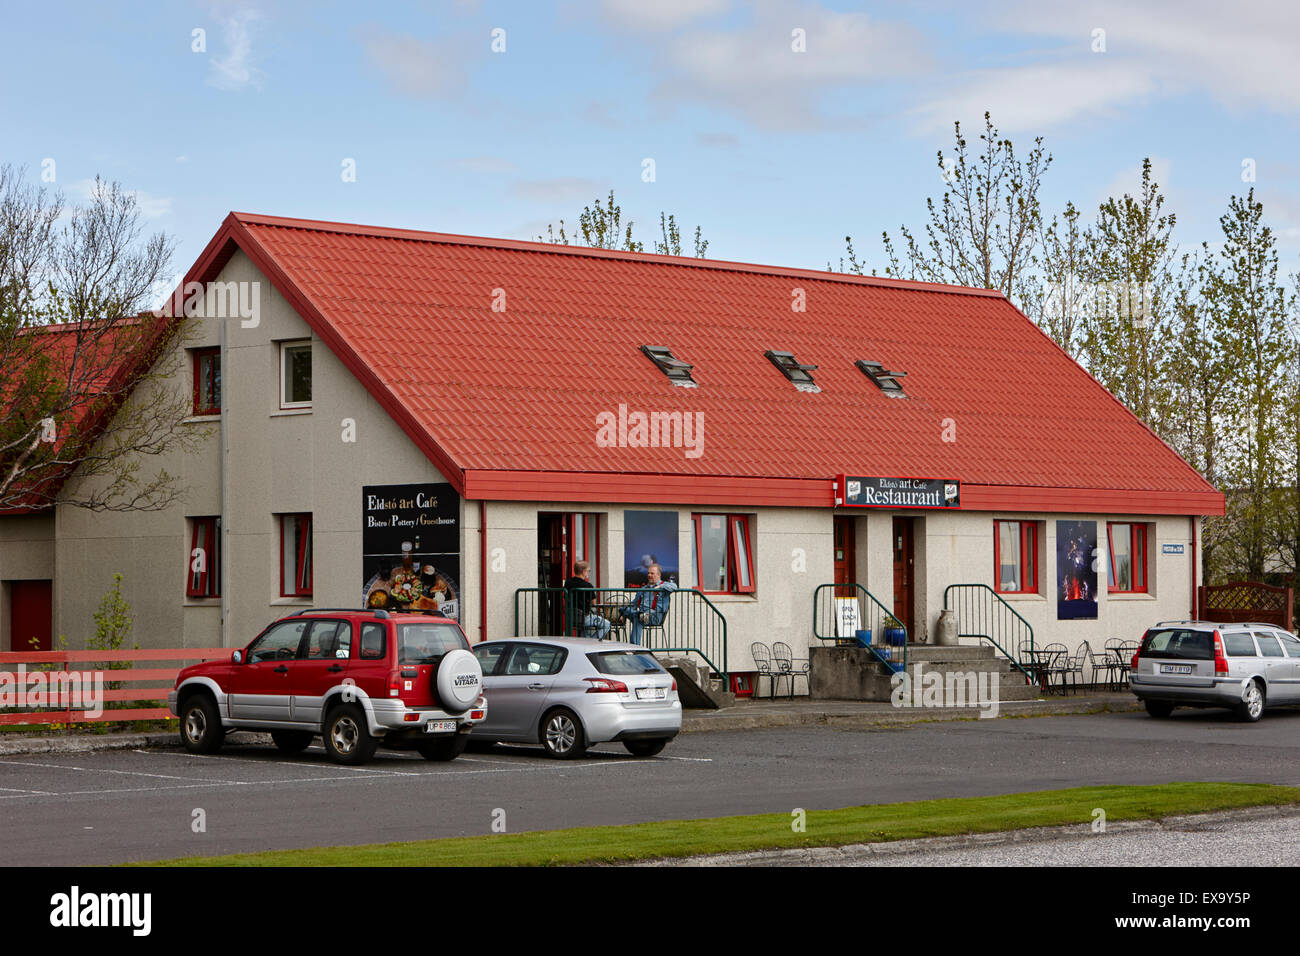 Eldsto art cafe e bistrot ristorante stradale sulla Route 1 in hvolsvollur Islanda Foto Stock